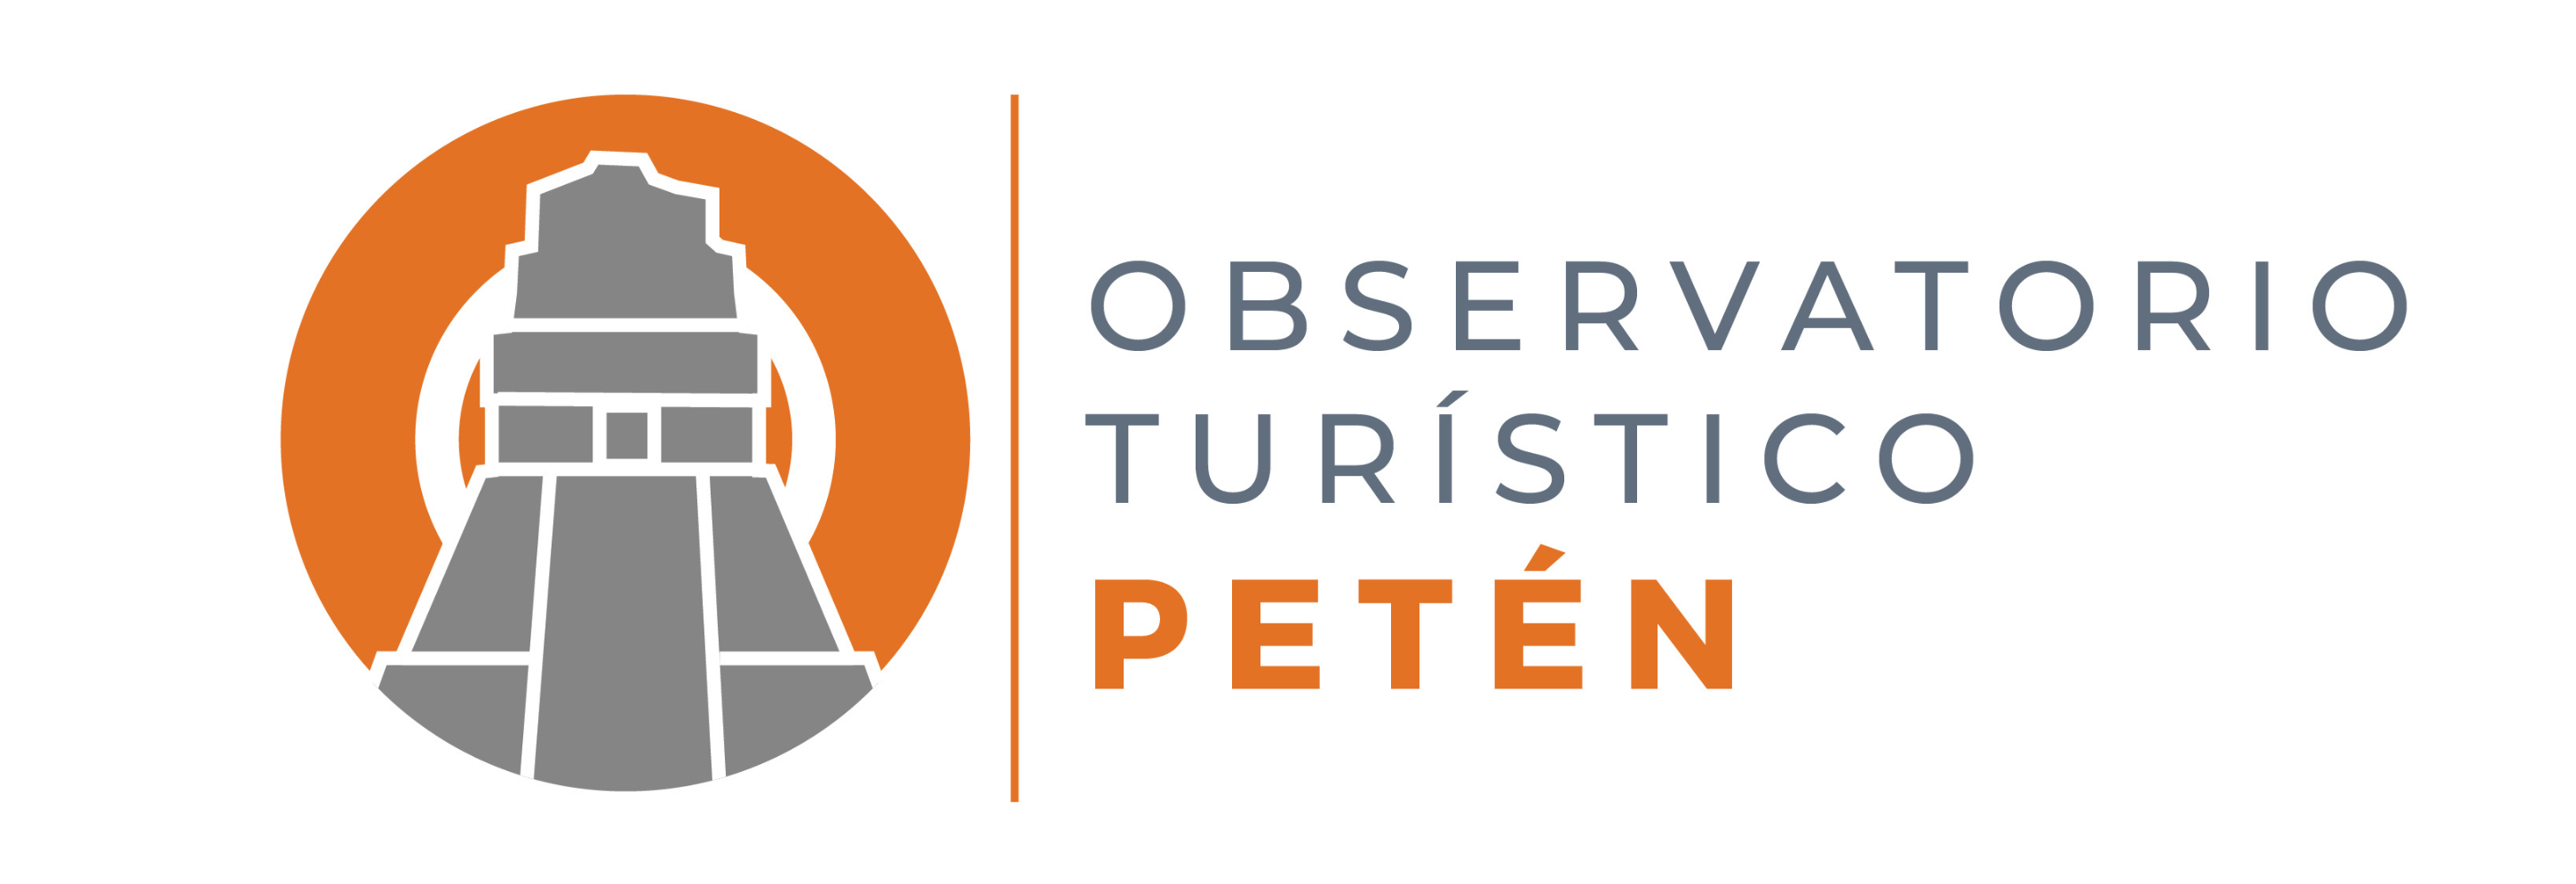 Observatorio turístico de Petén